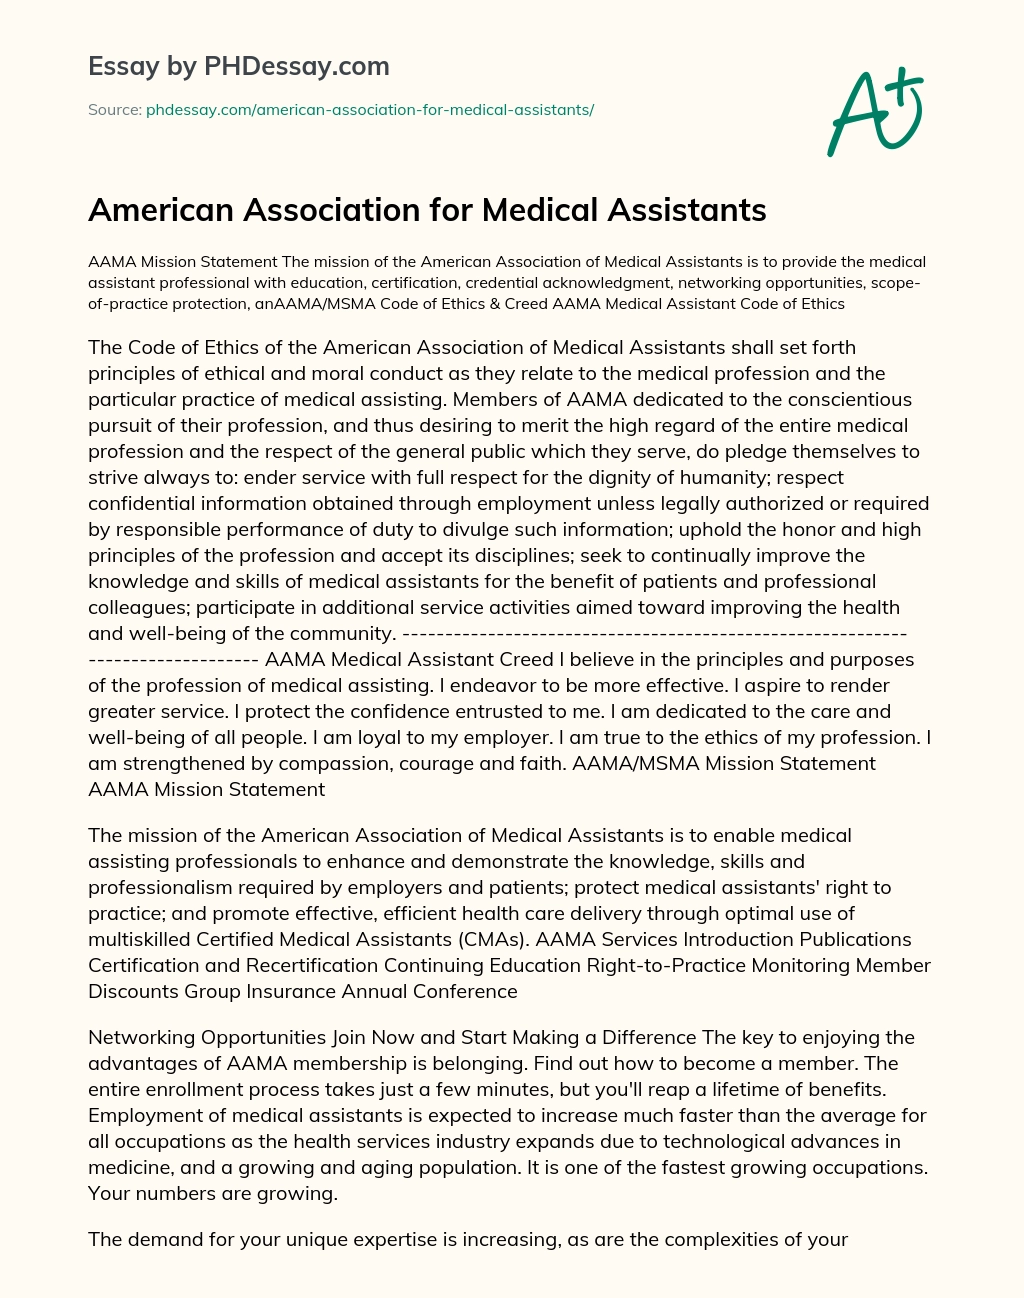 American Association for Medical Assistants essay